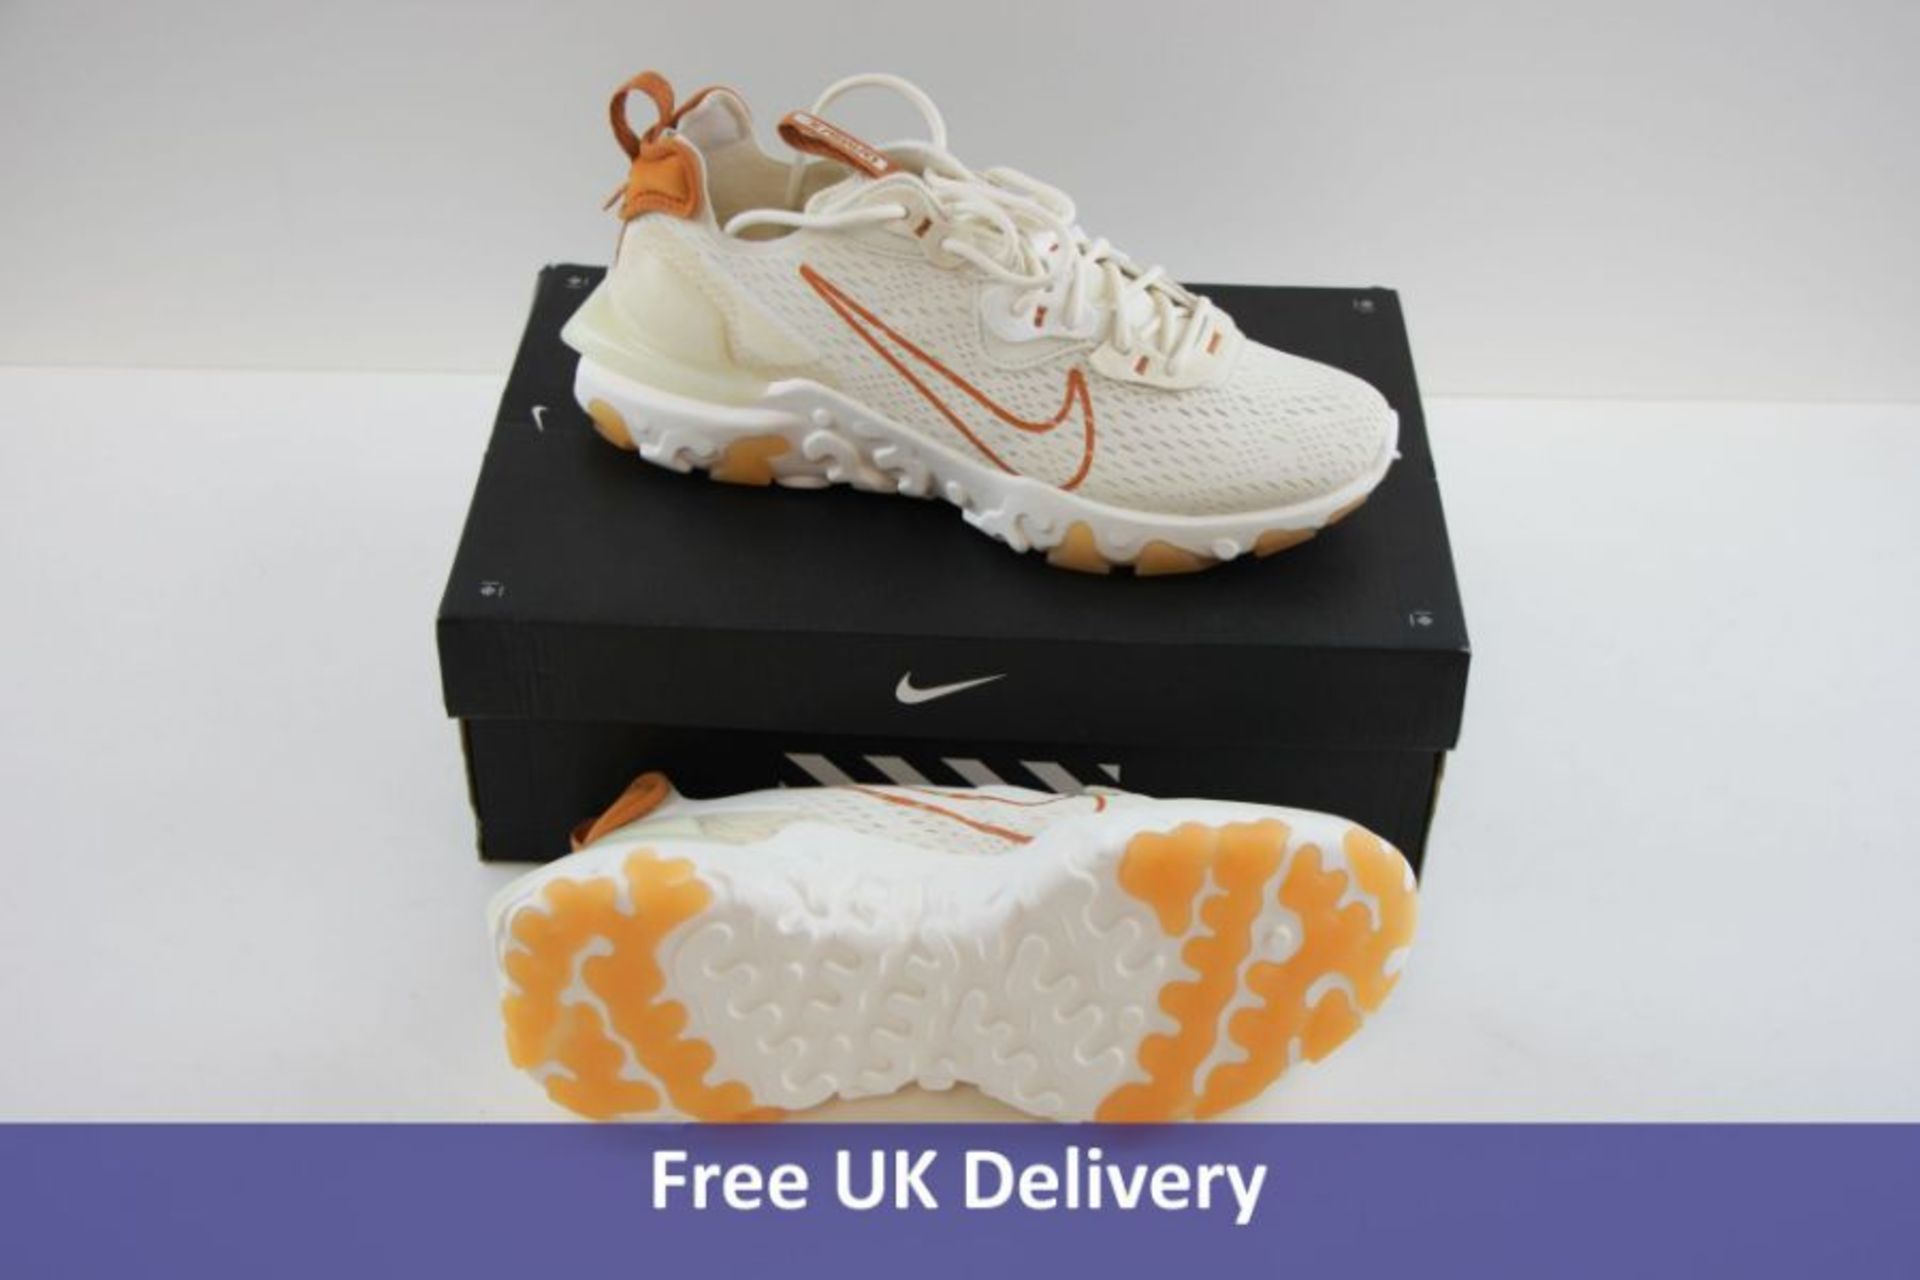 Nike Women's React Vision Trainers, Cream and Orange, UK 4